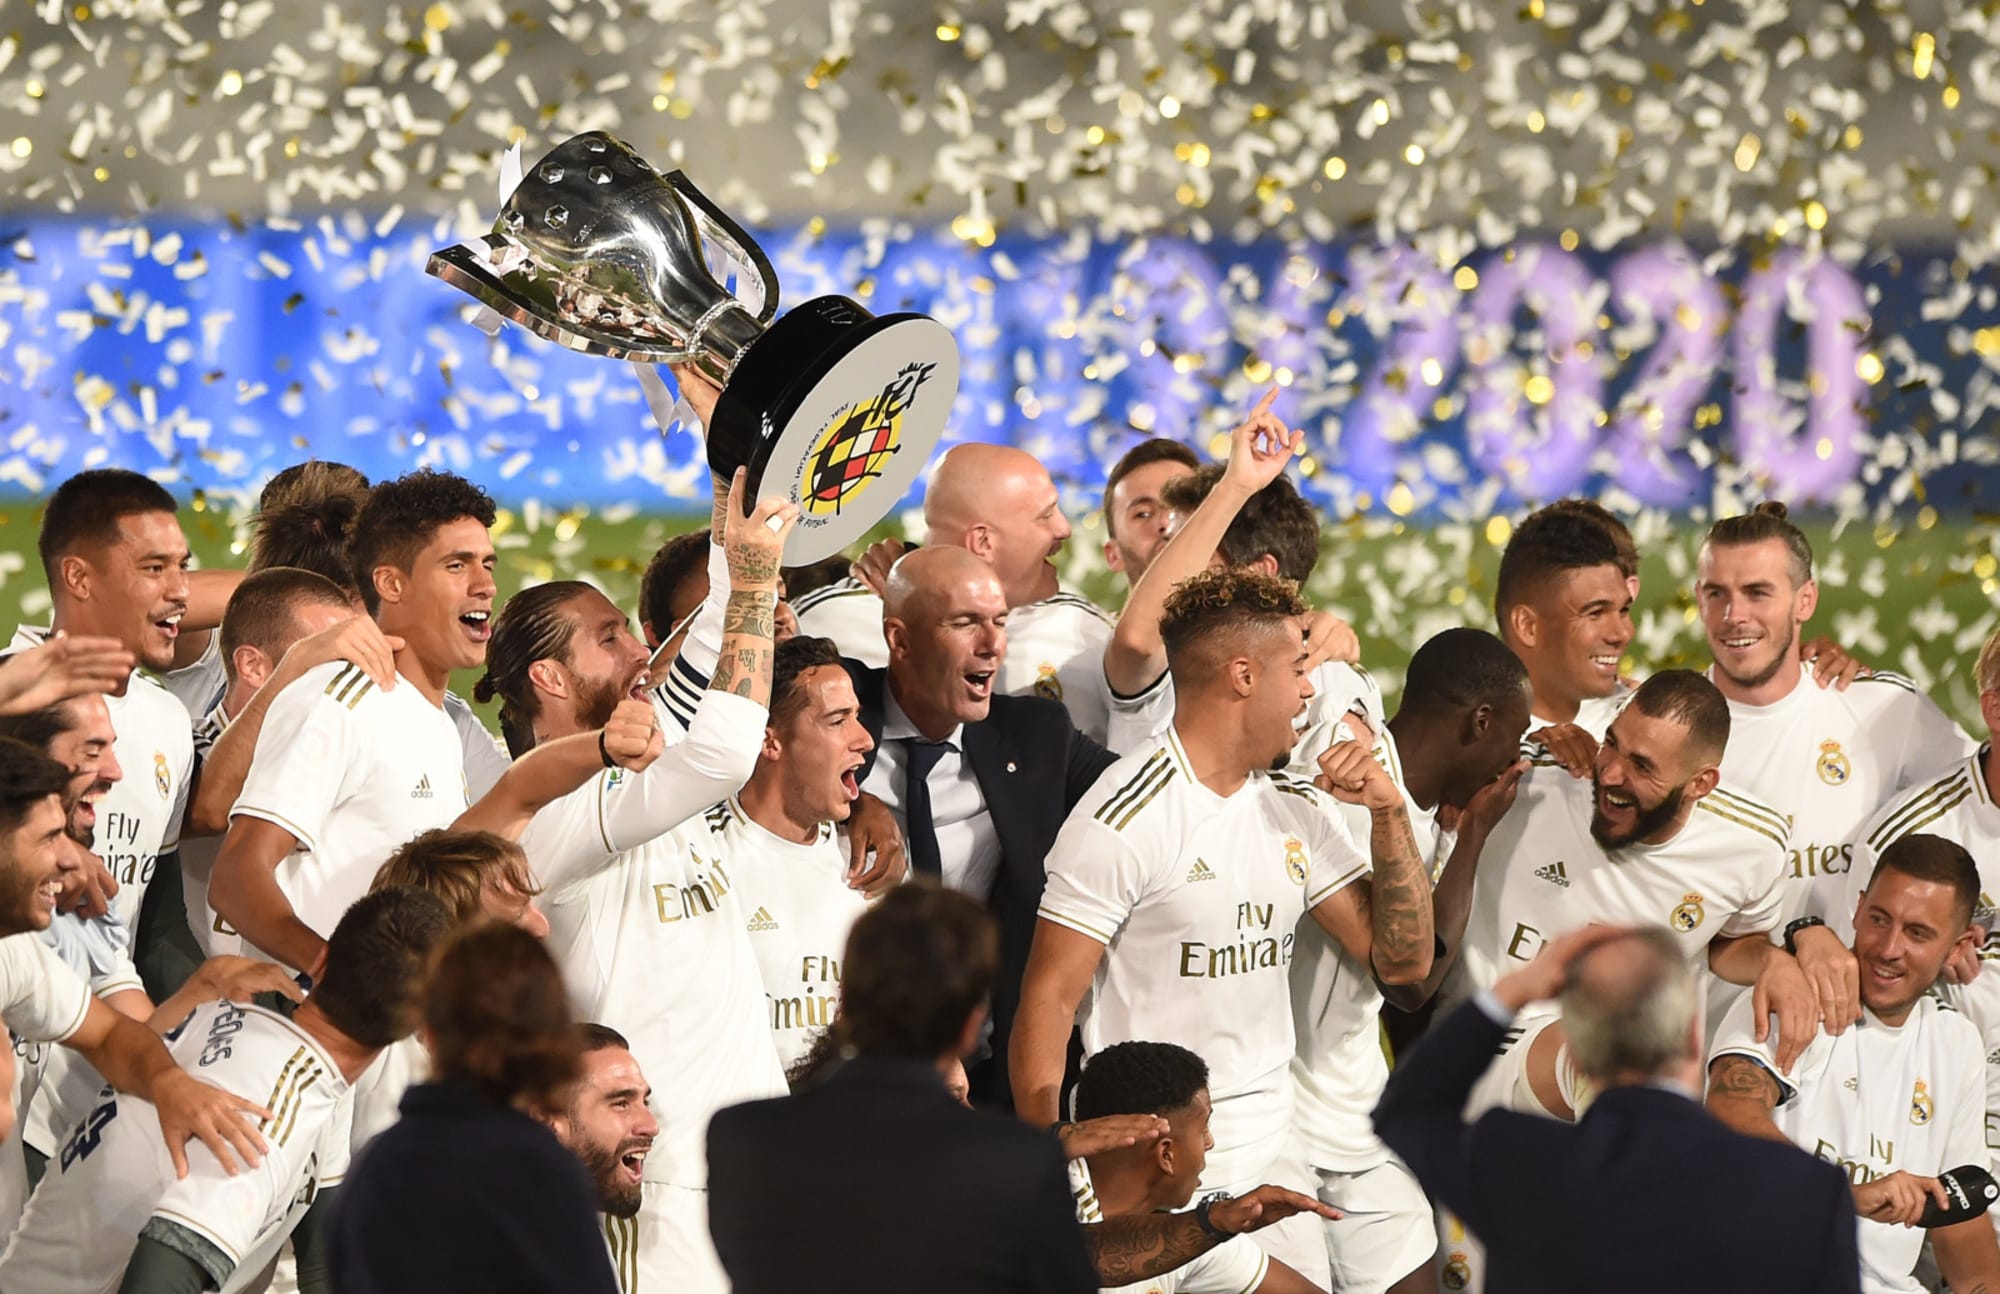 Bedrag alene døråbning Real Madrid confirmed Spanish La Liga champions post-COVID-19